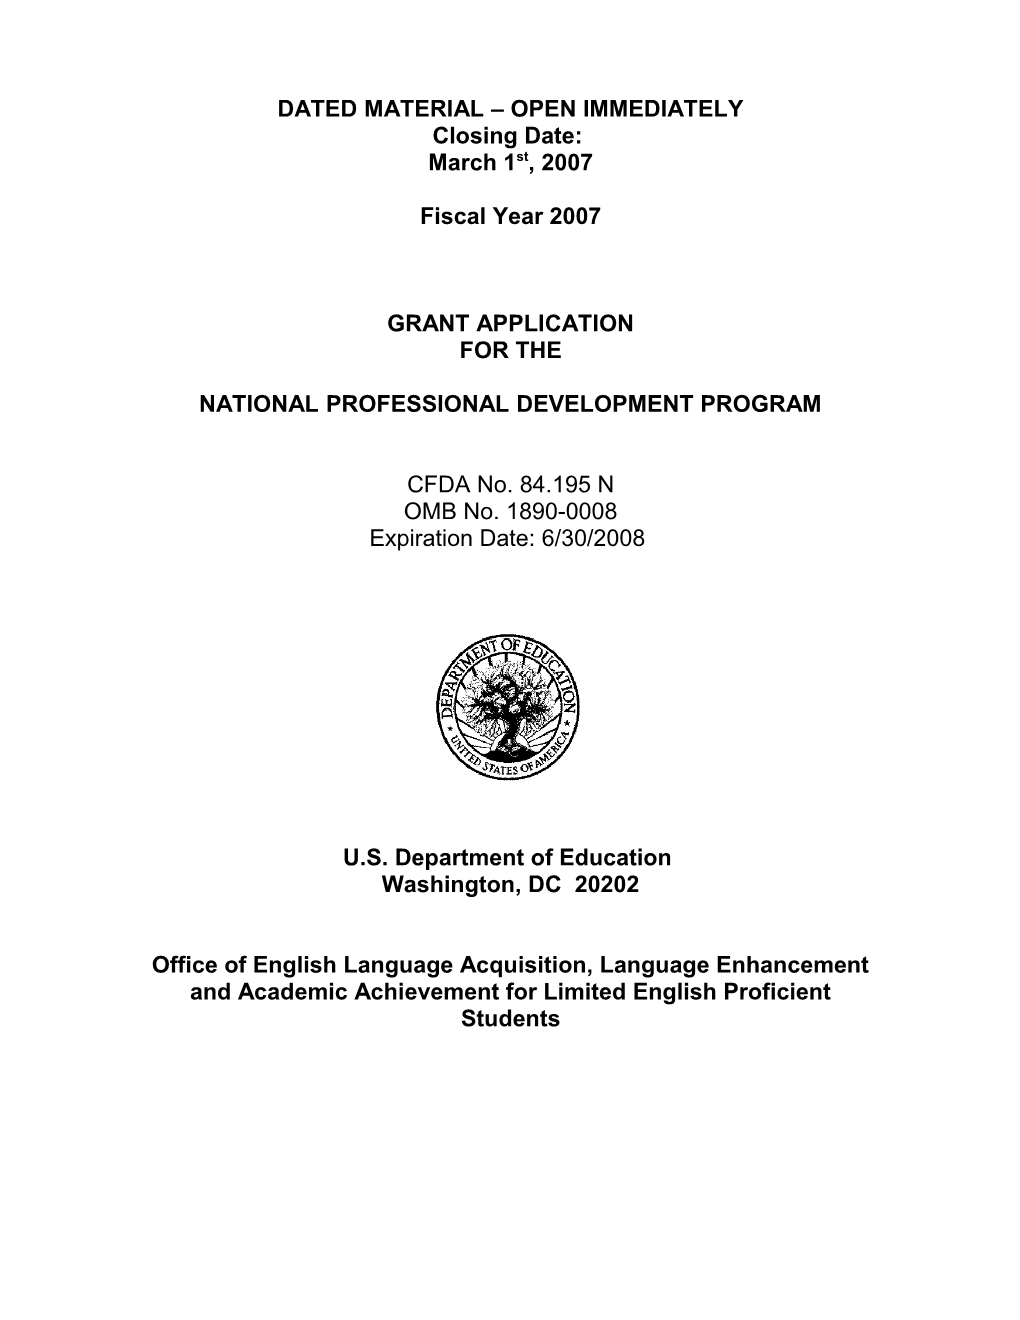 Application for National Professional Development Program (MS Word)